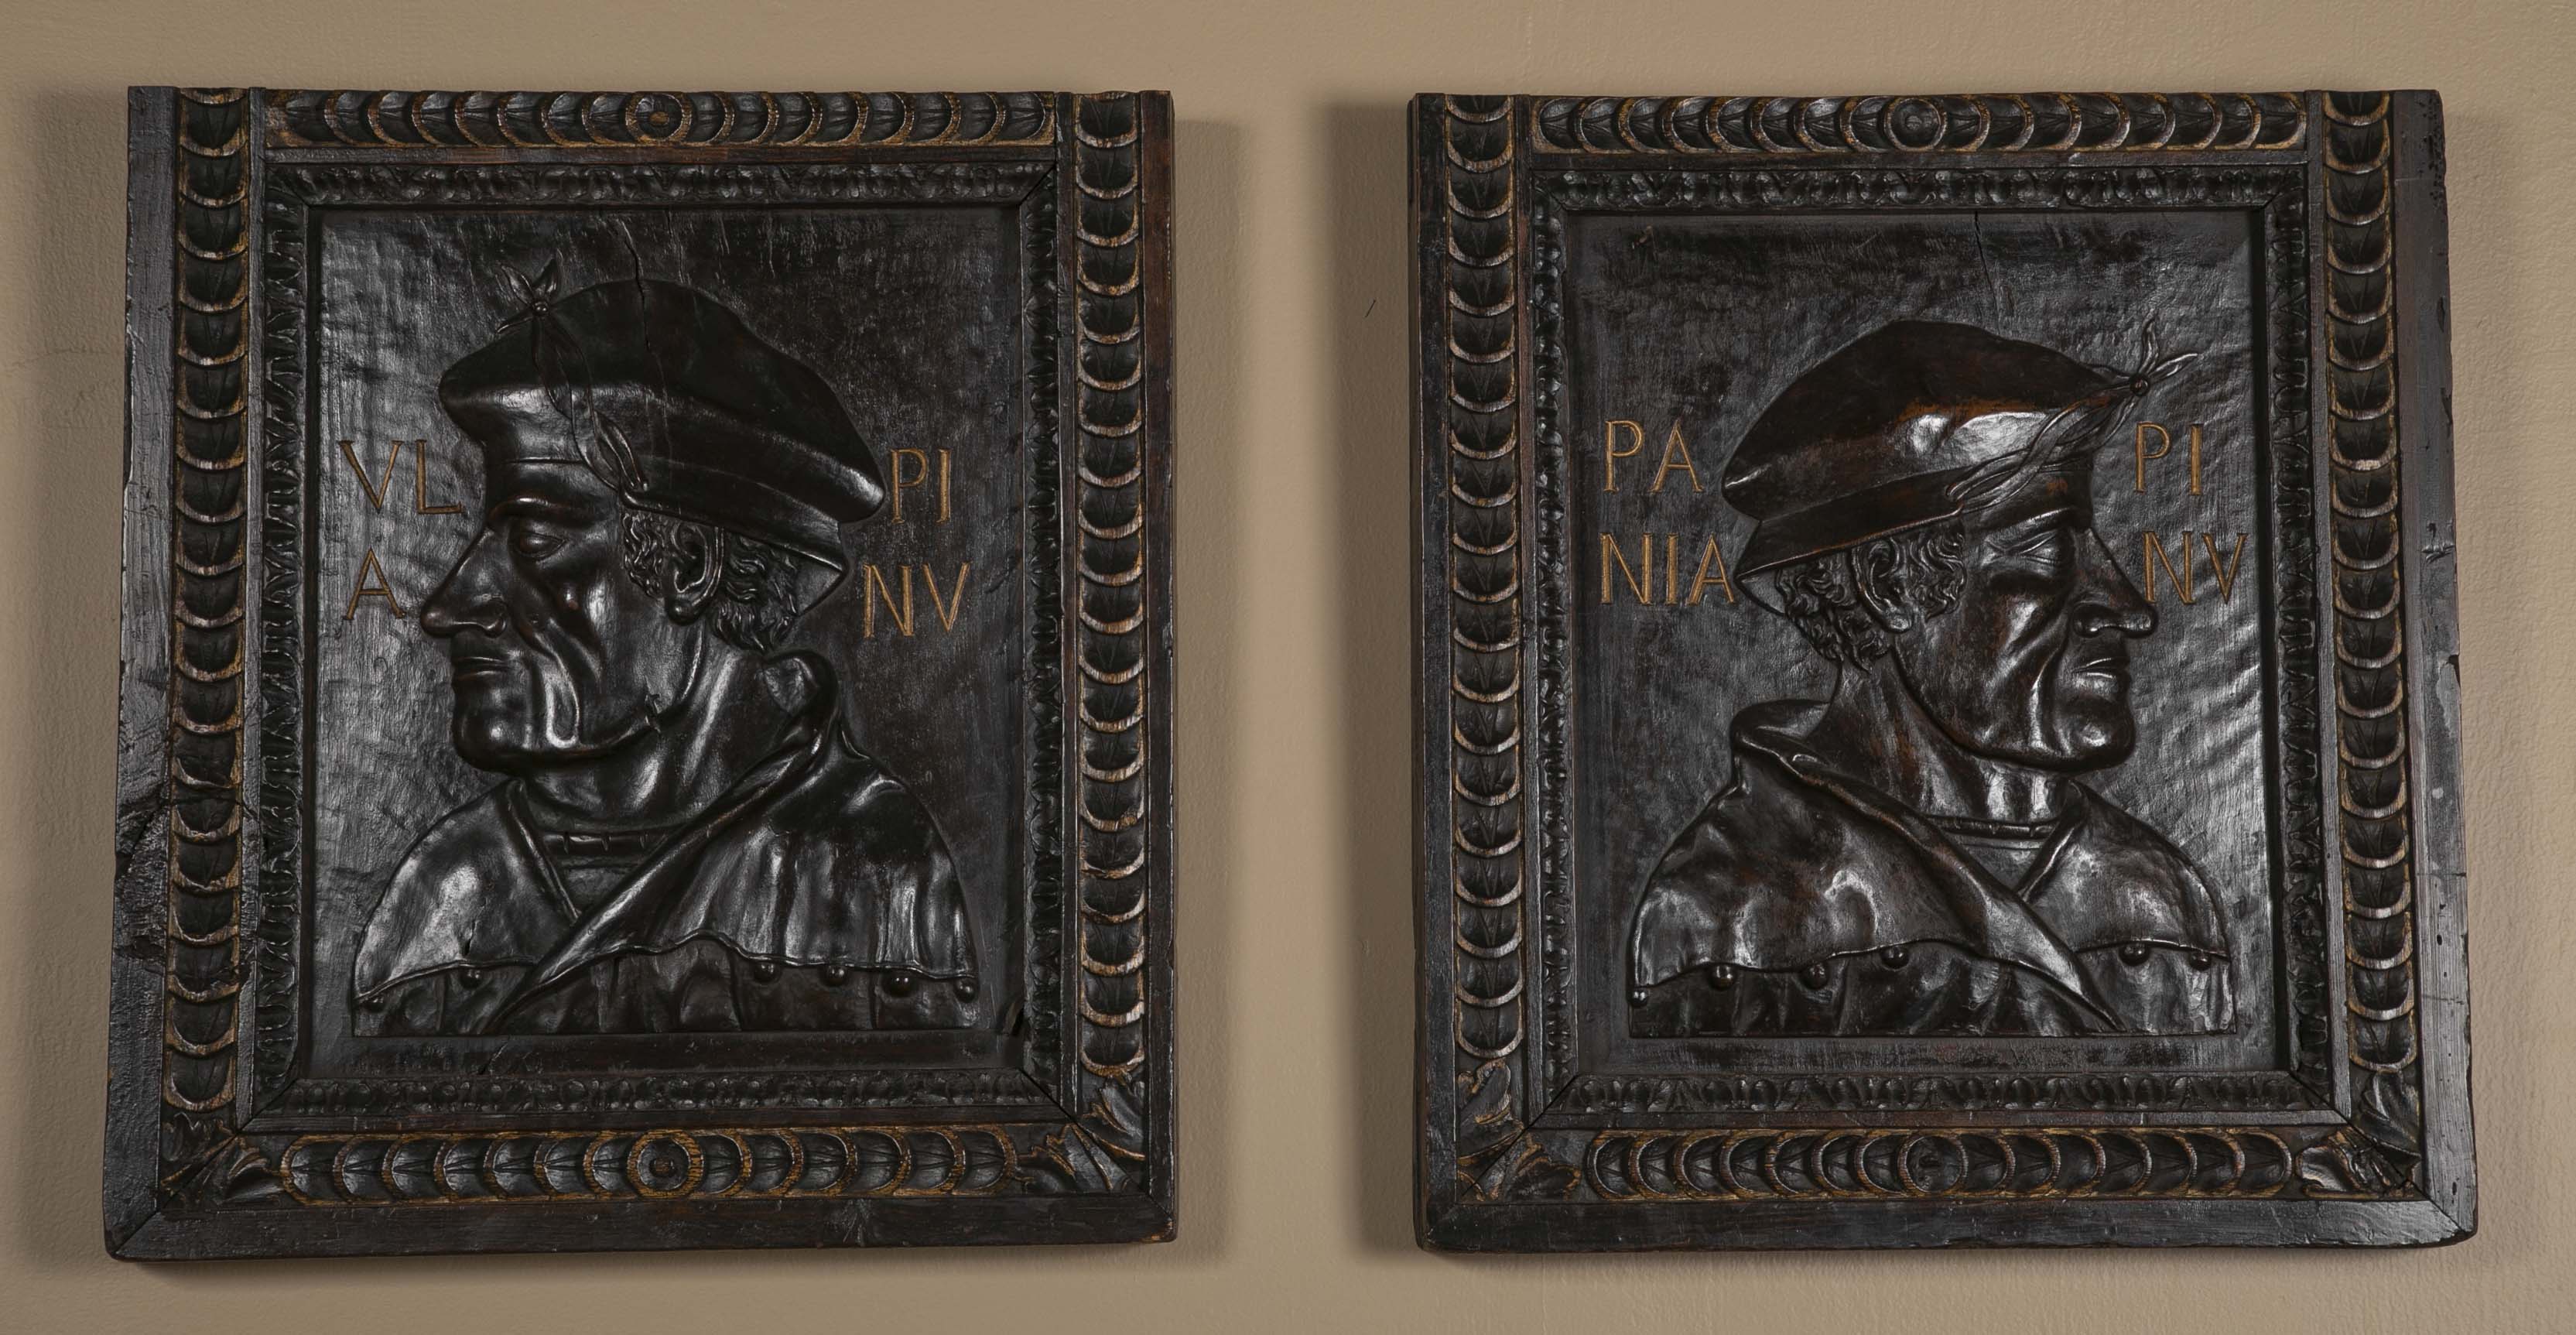 Pair of 19th Century Continental Walnut Door Panels